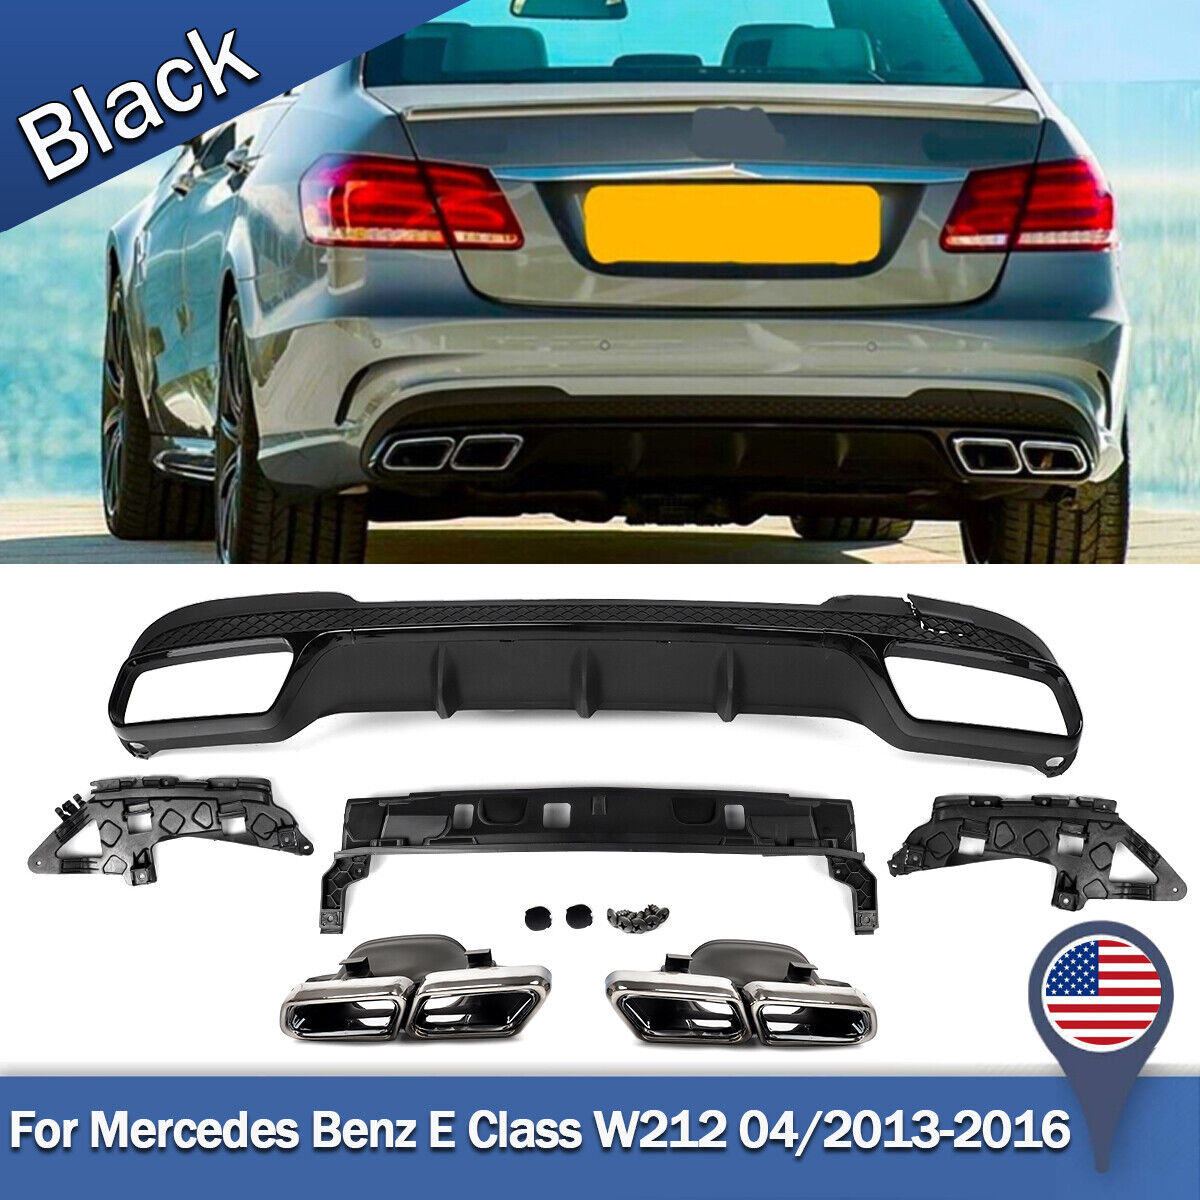 For Mercedes W212 E63 E Class 13-2016 Rear Diffuser E63 AMG Look W/Exhaust Tips